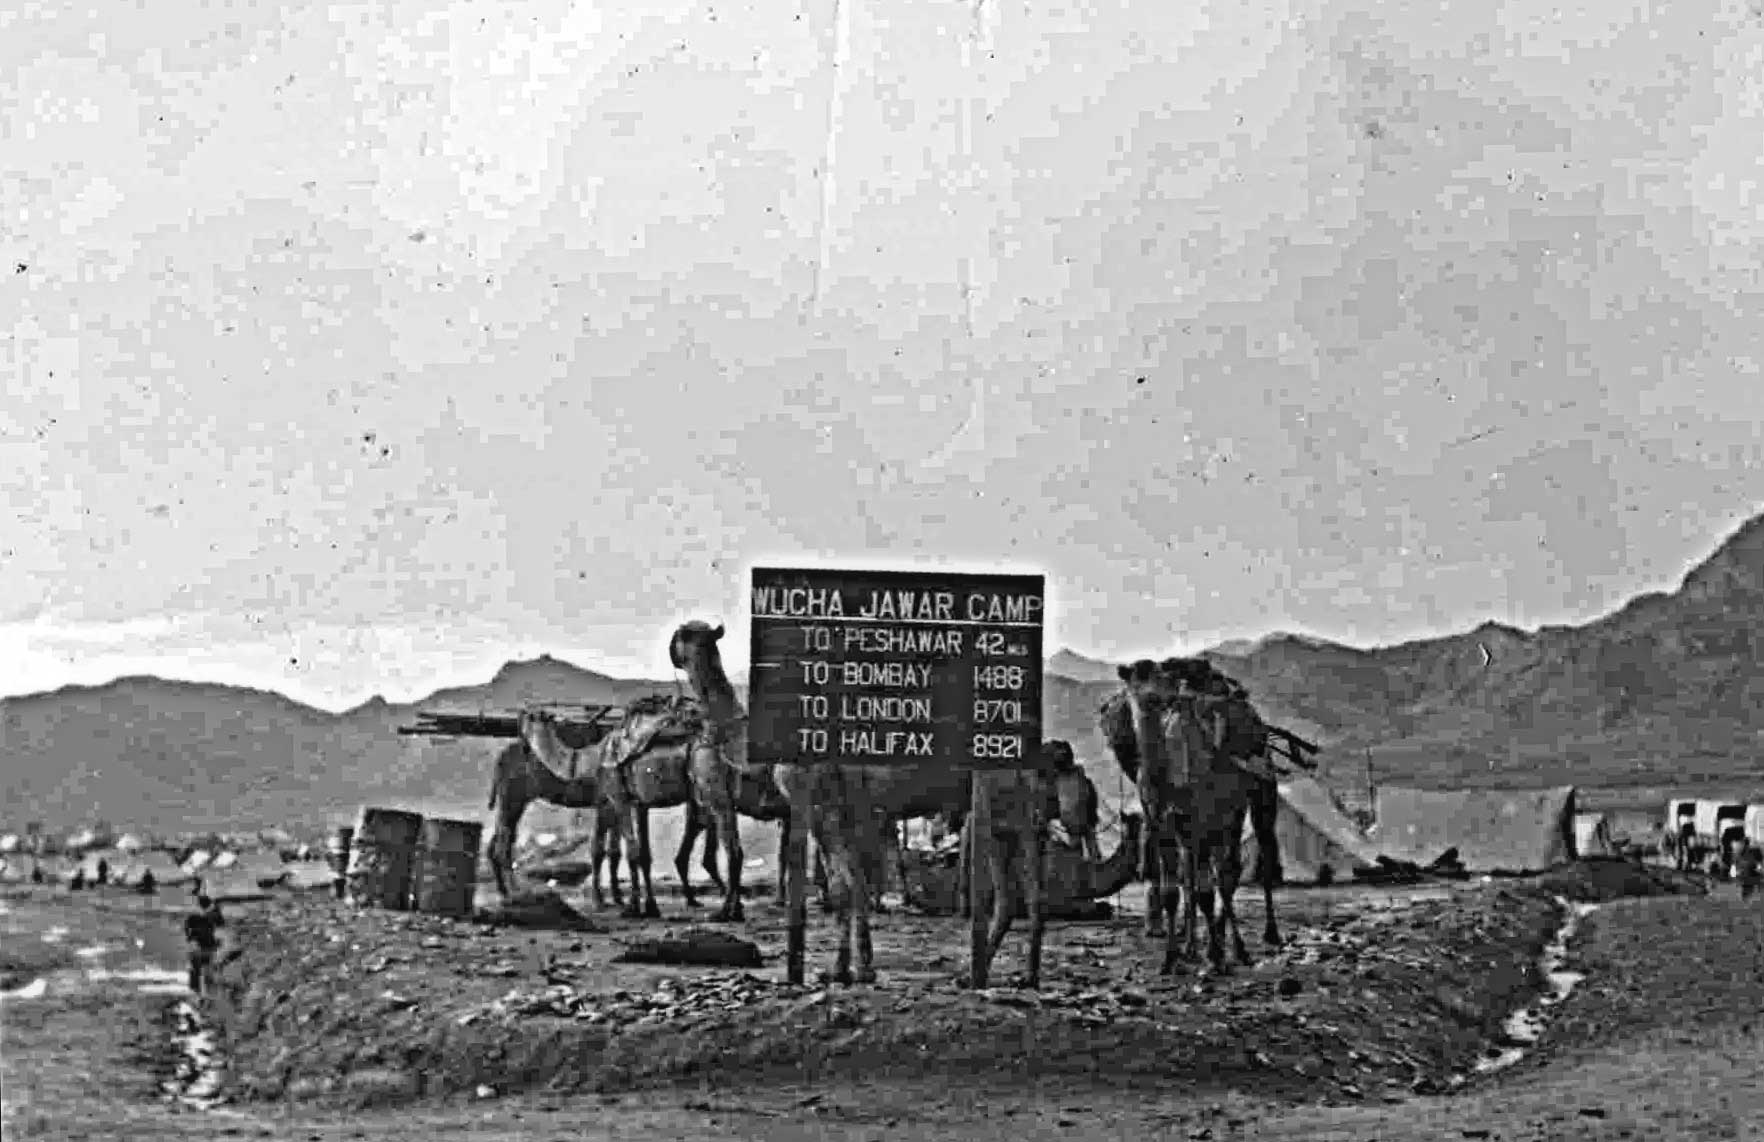 Wucha Jawar Camp sign